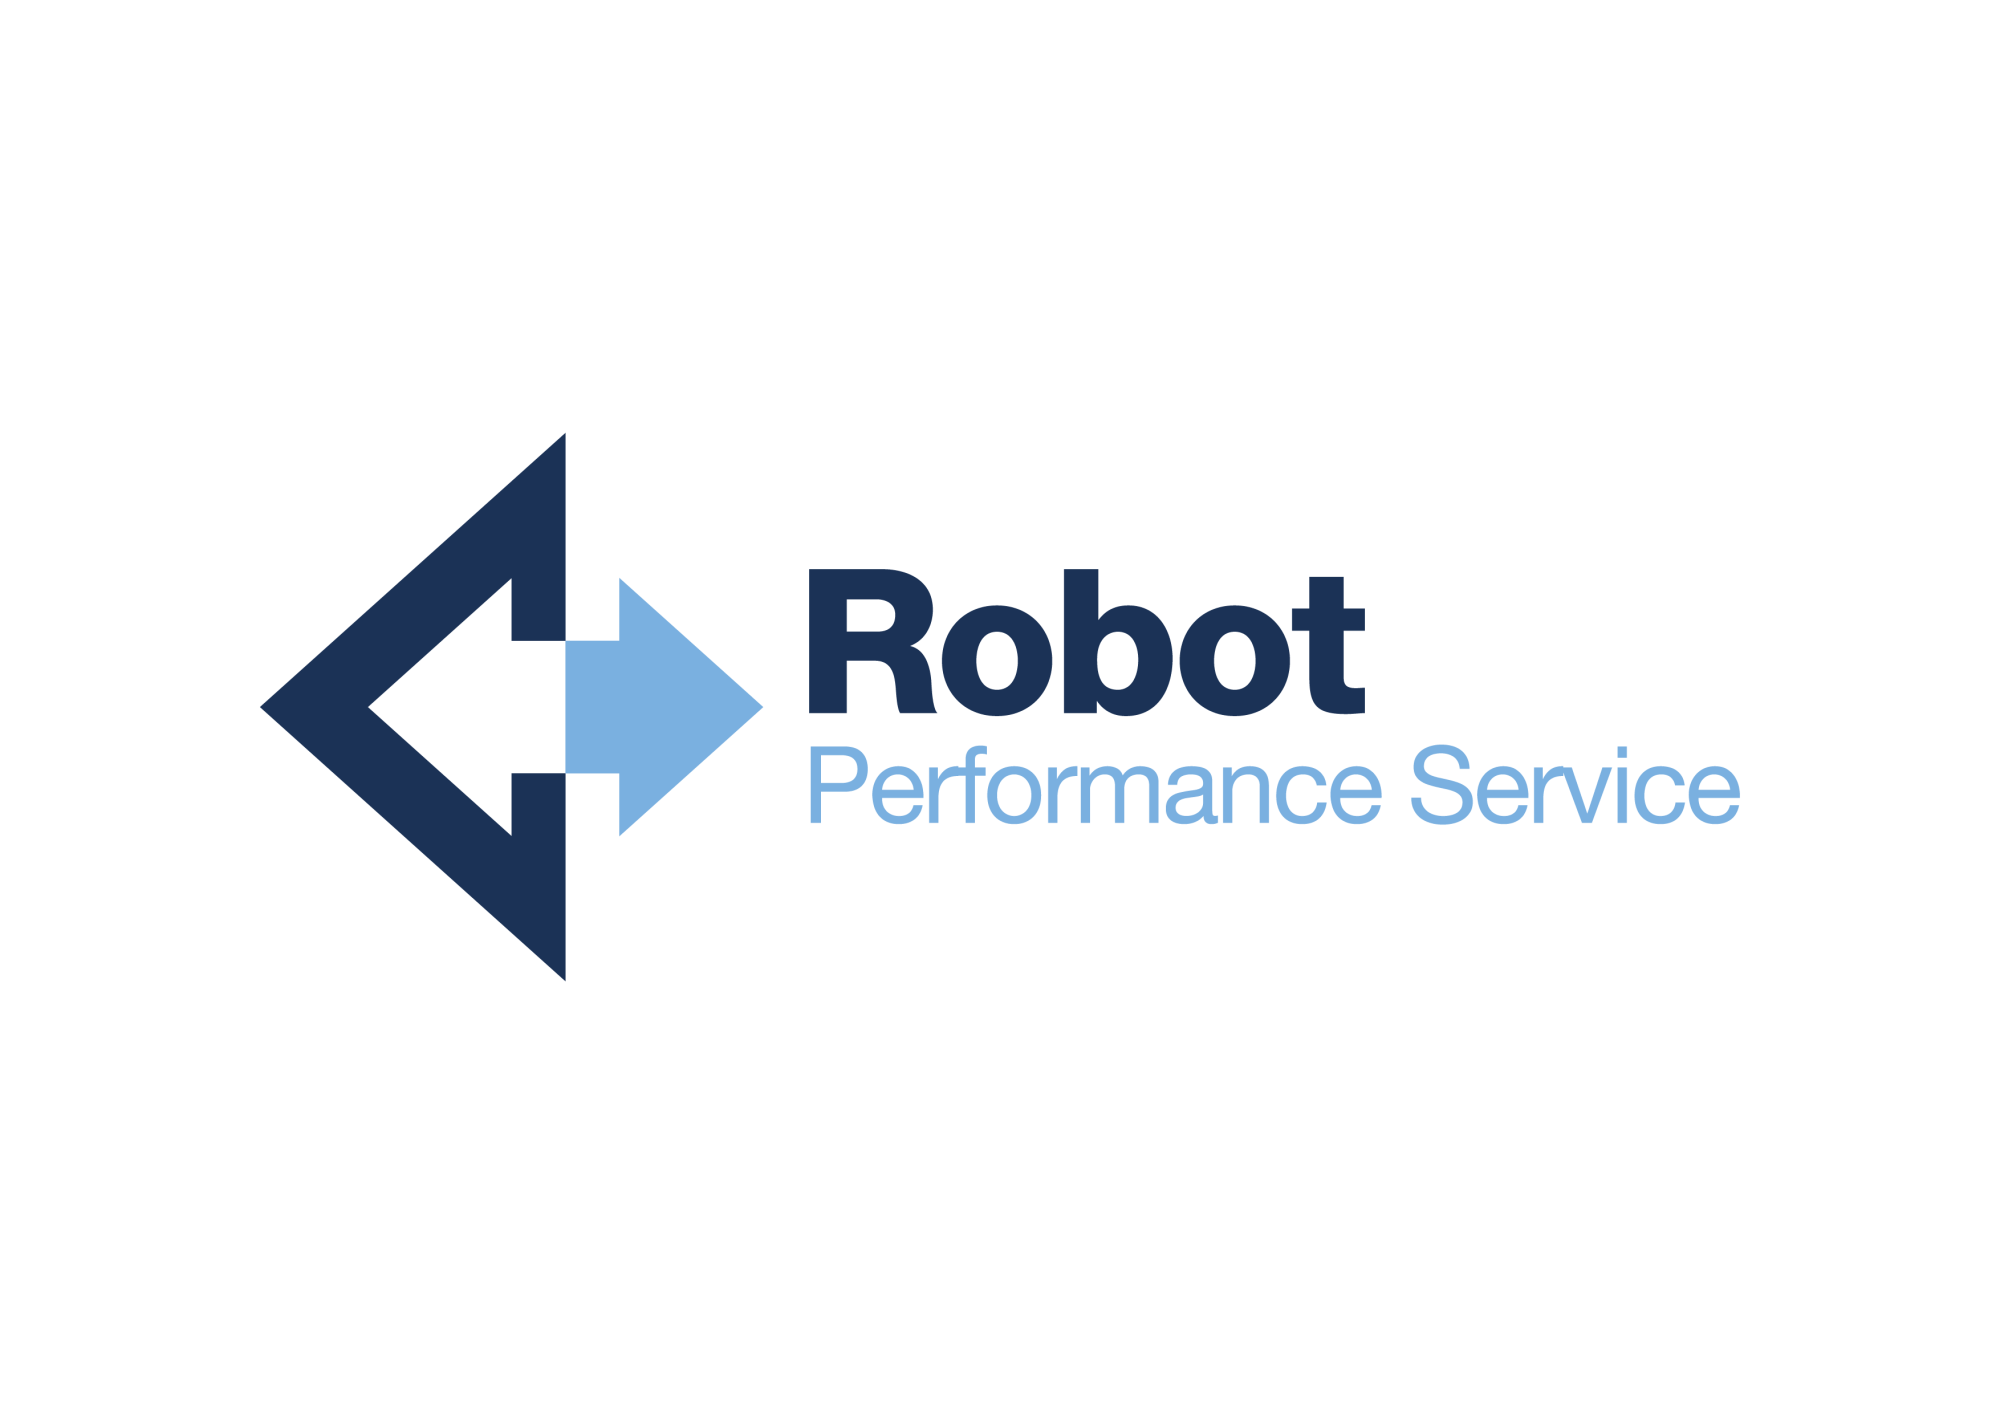 Robot Performance Service logo